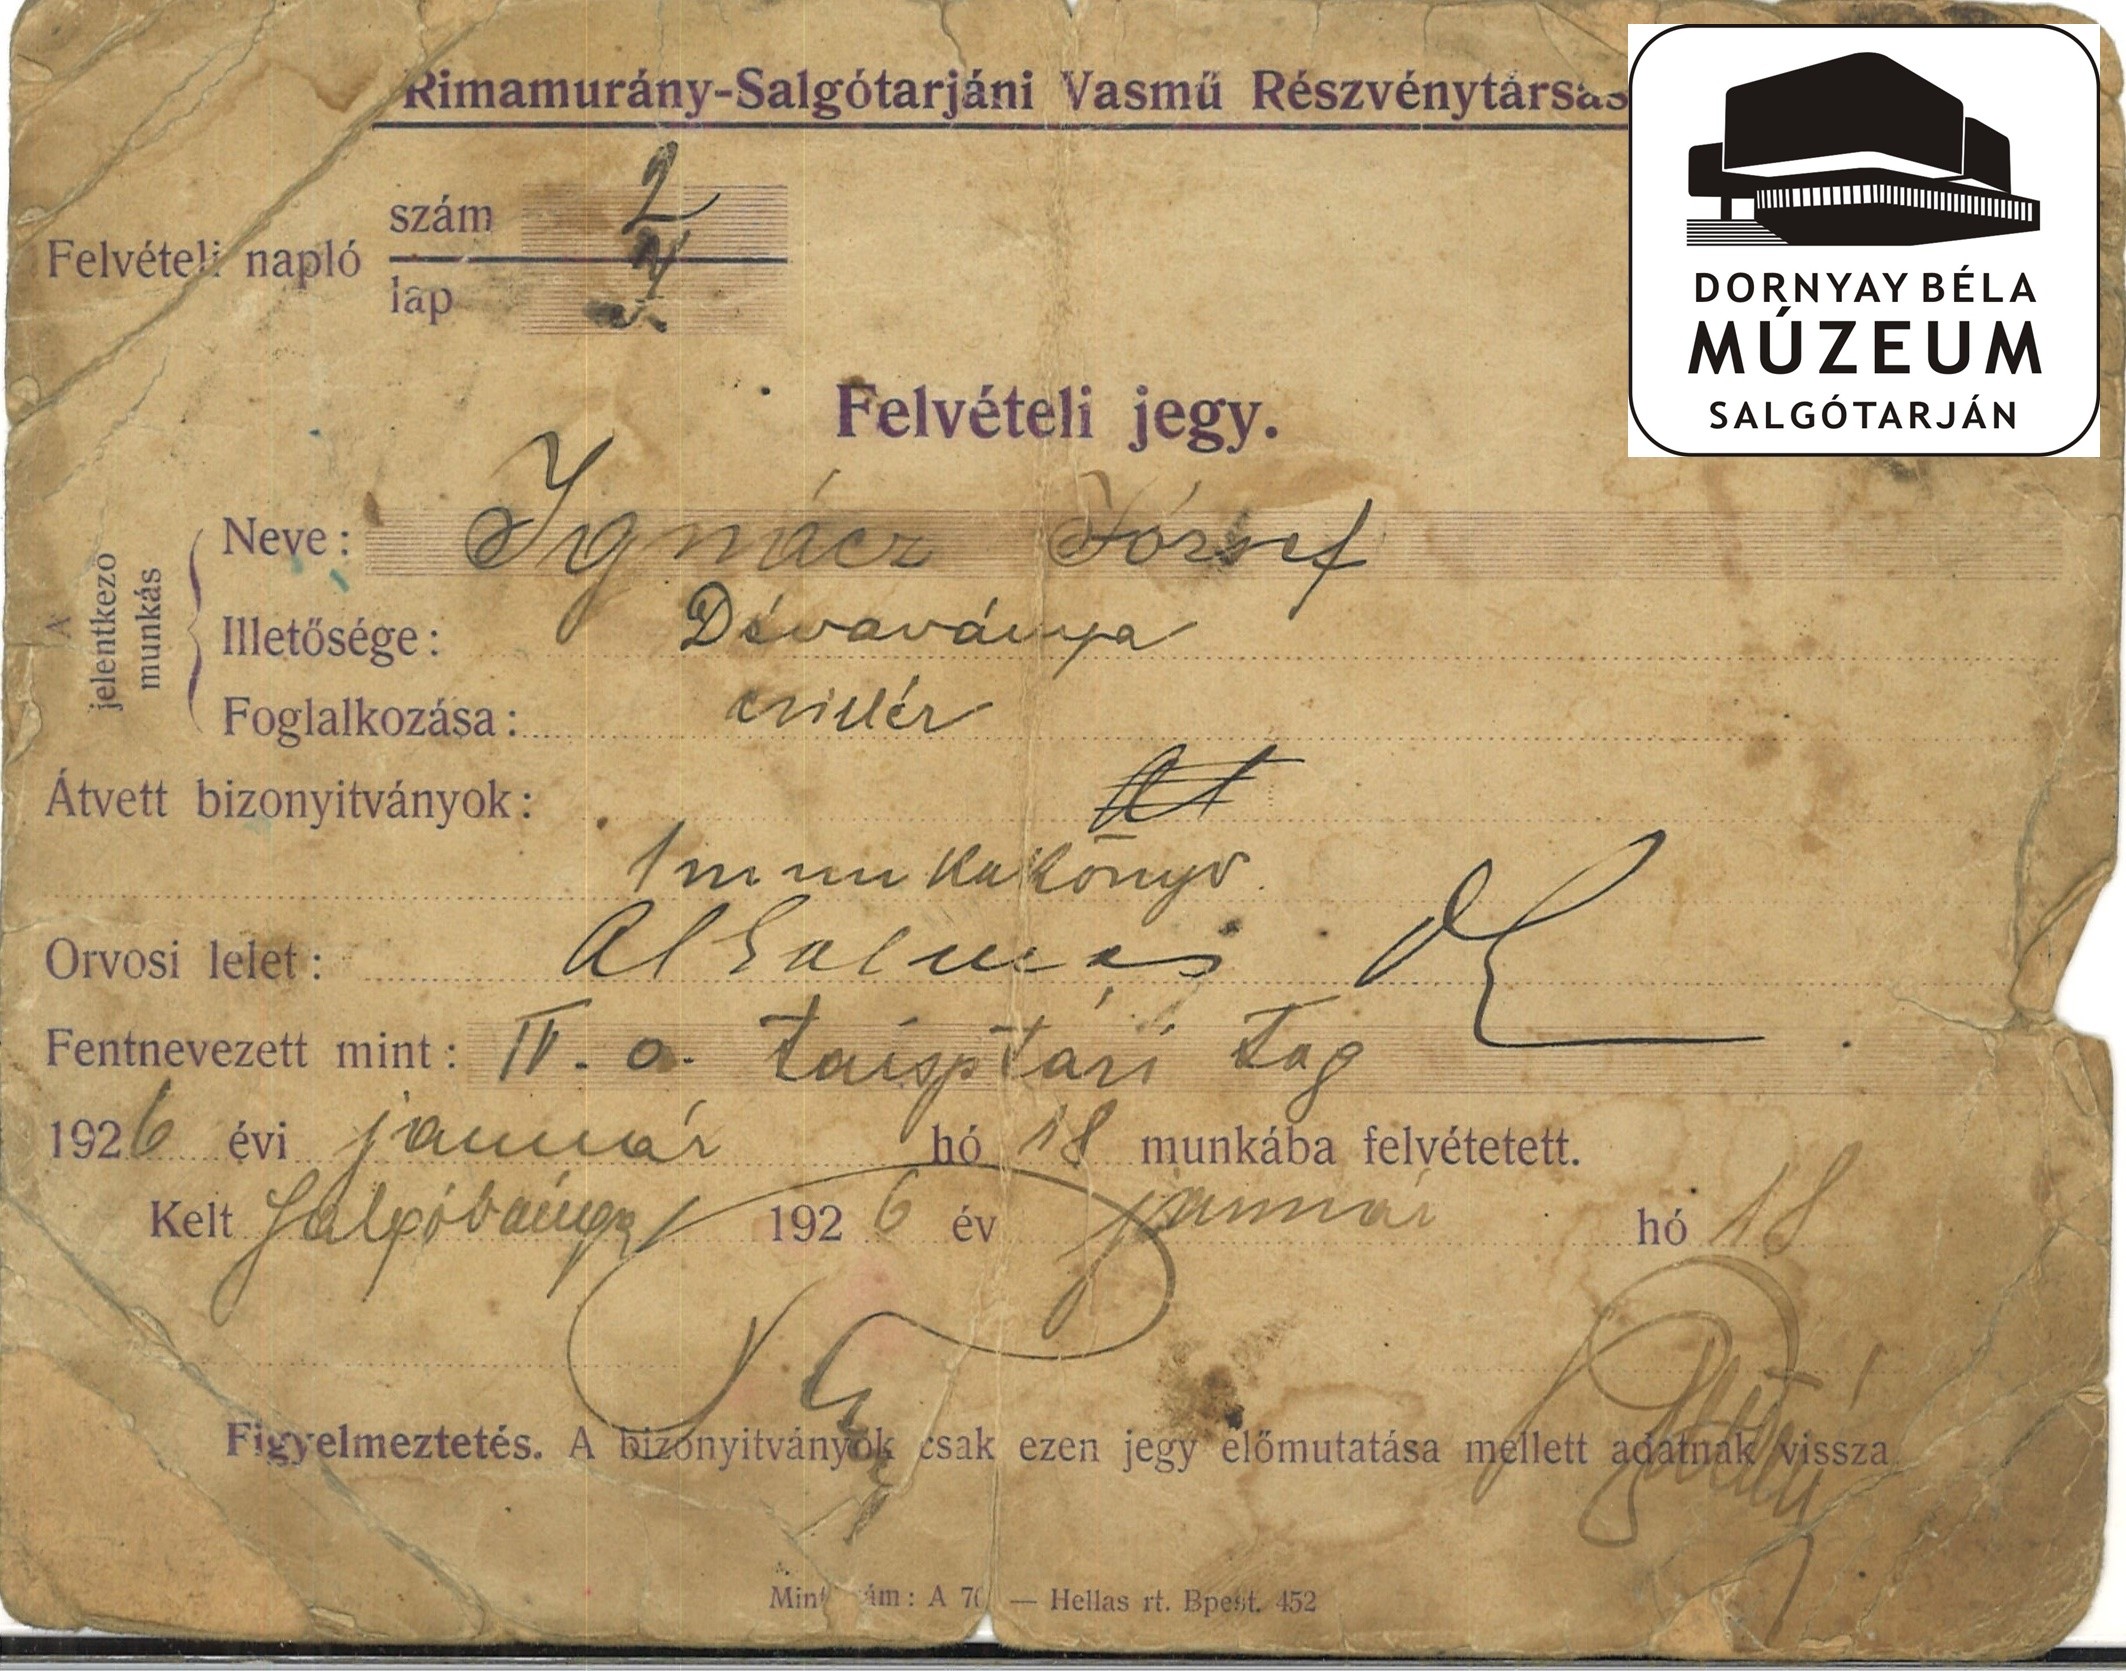 Ignácz József felvételi jegye (Rimamurány - St-i Vasmű Rt. Salgót.) (Dornyay Béla Múzeum CC BY-NC-SA)